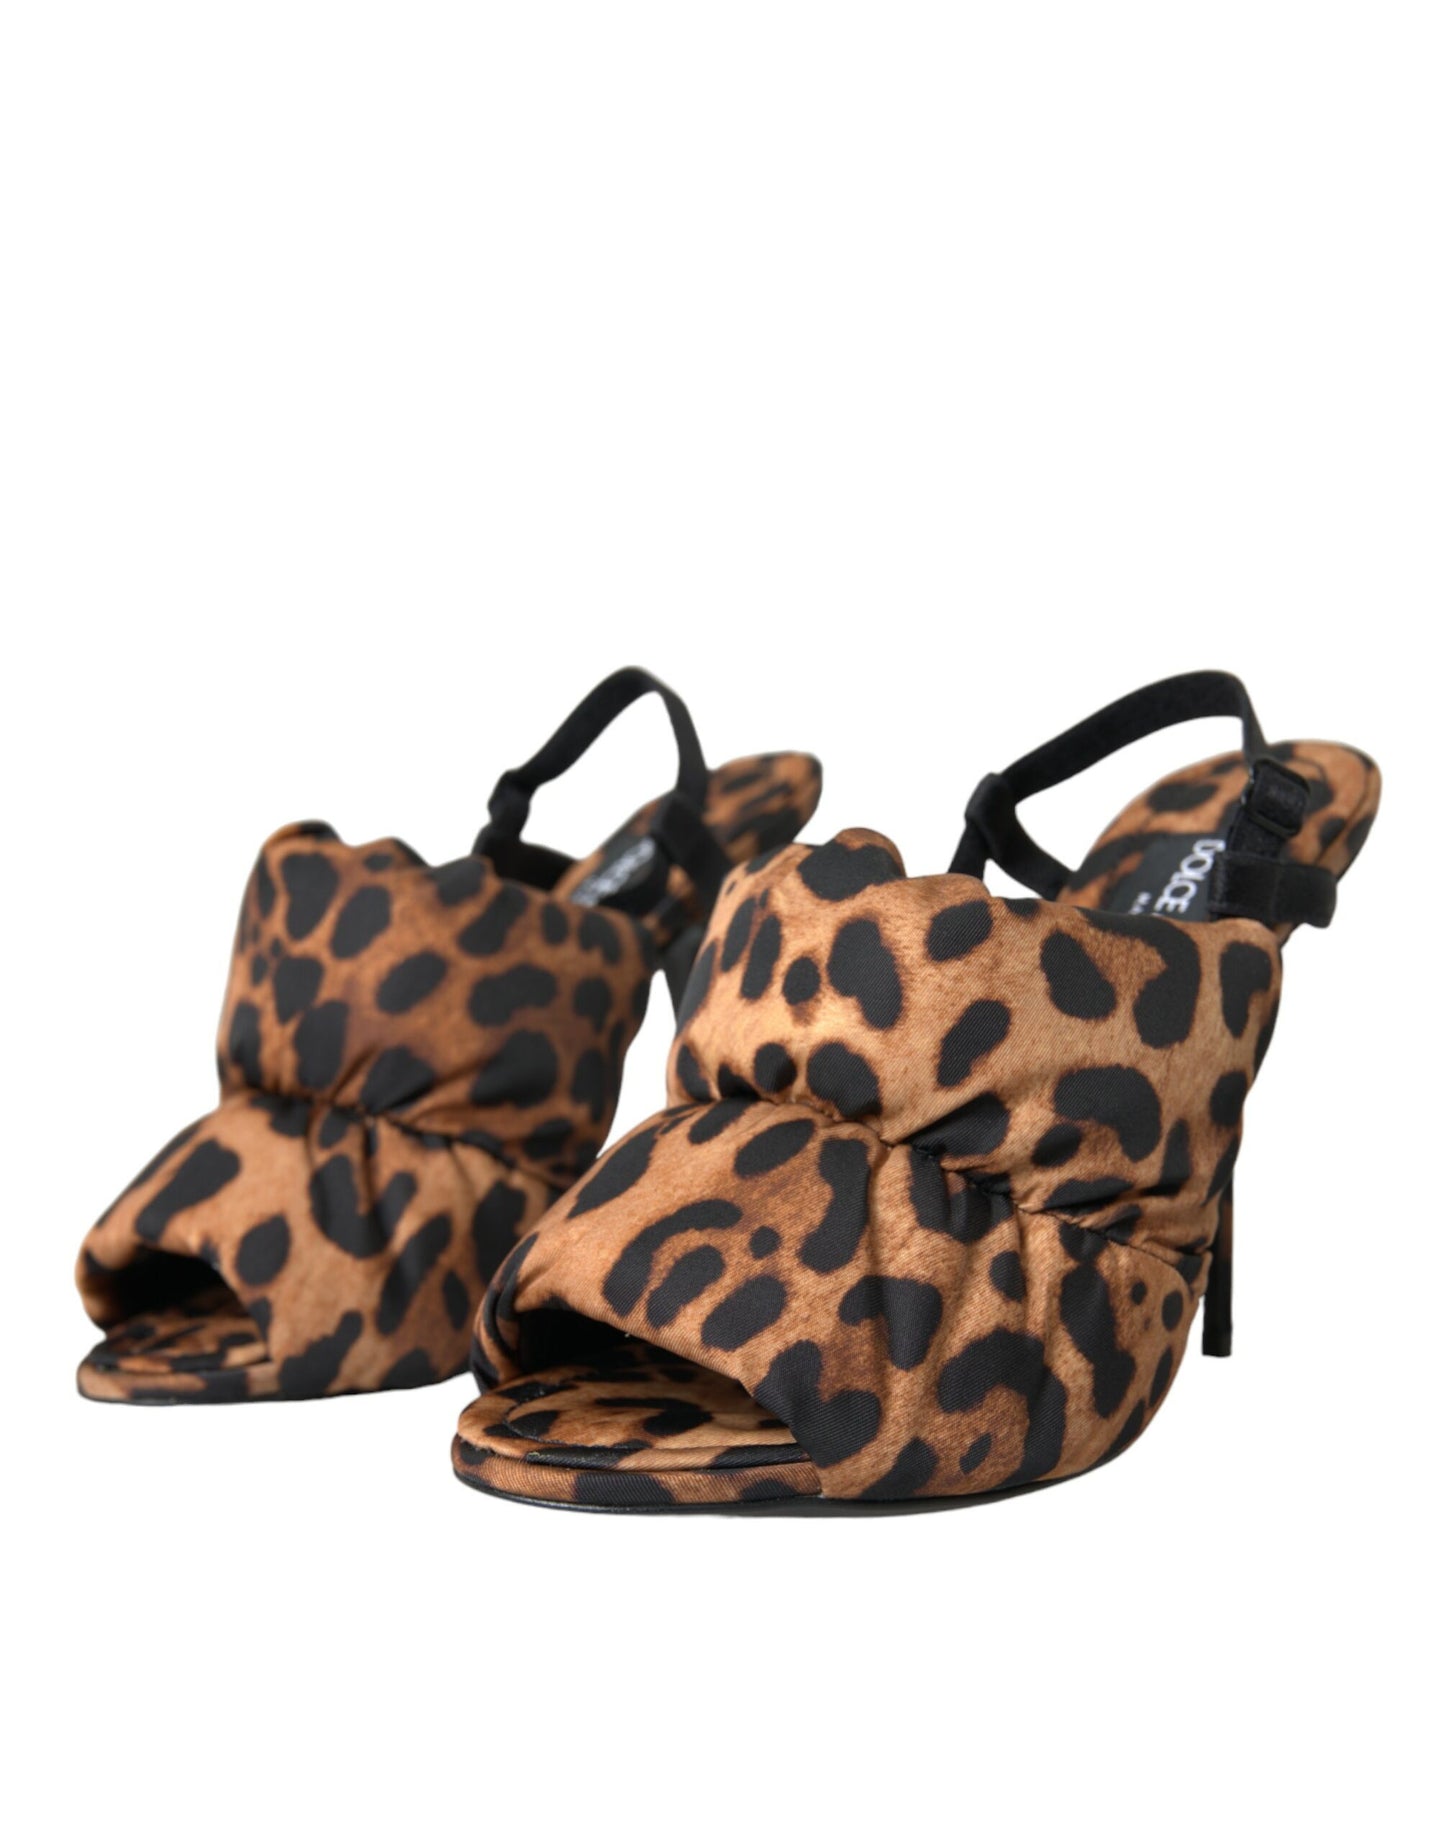 Brown Leopard Slingback Heels Sandals Shoes